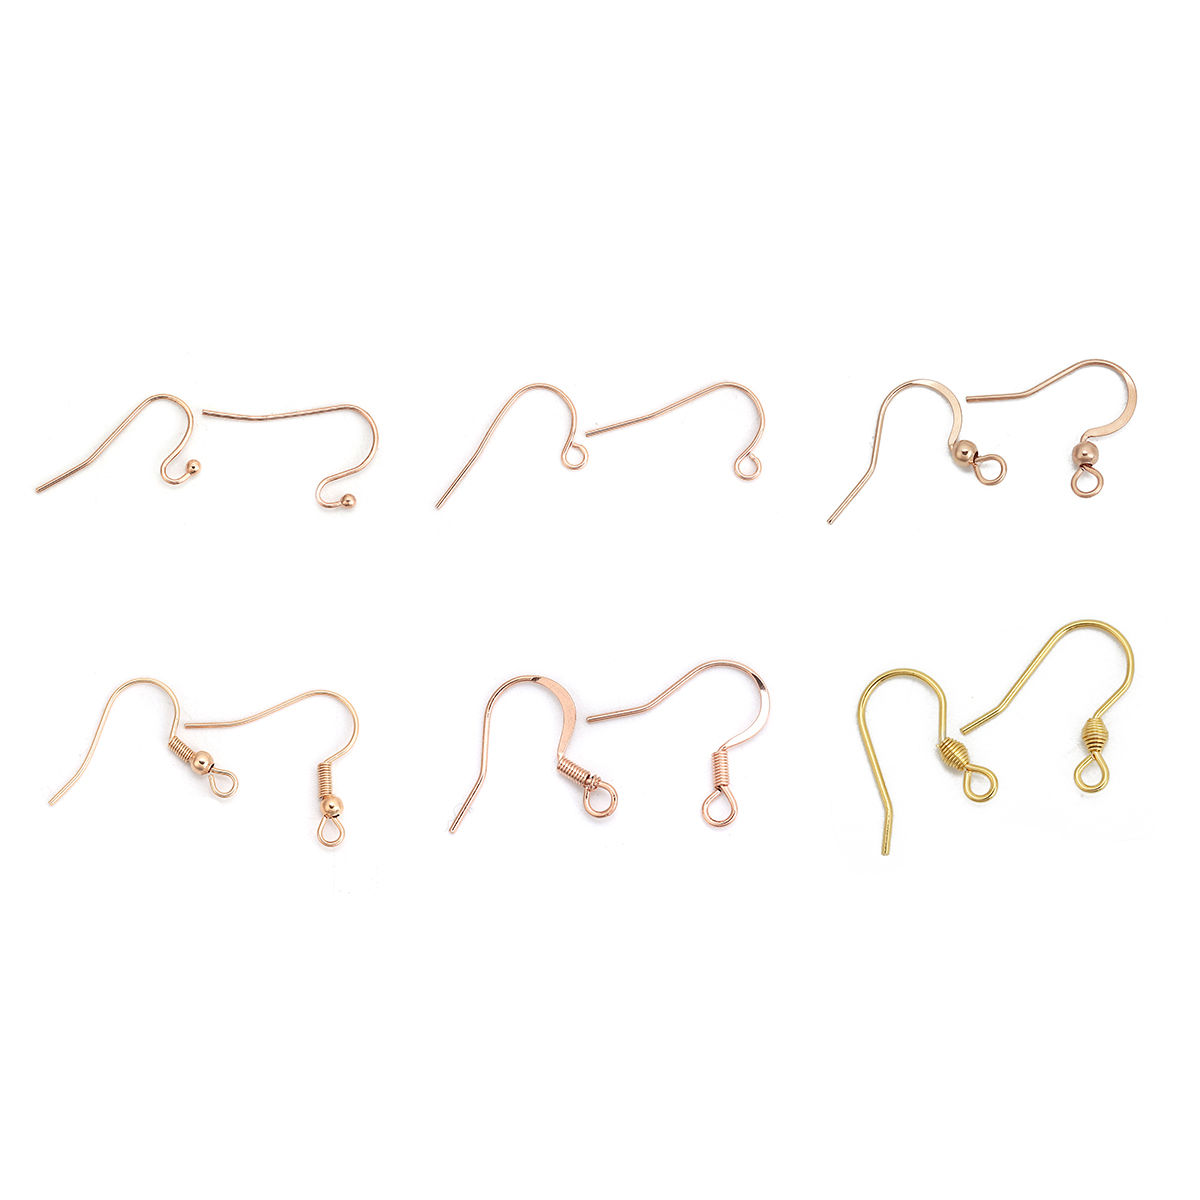 Picture of 304 Stainless Steel Ear Wire Hooks Earring Findings Silver Tone W/ Loop 22mm x 20mm, Post/ Wire Size: (21 gauge), 10 PCs